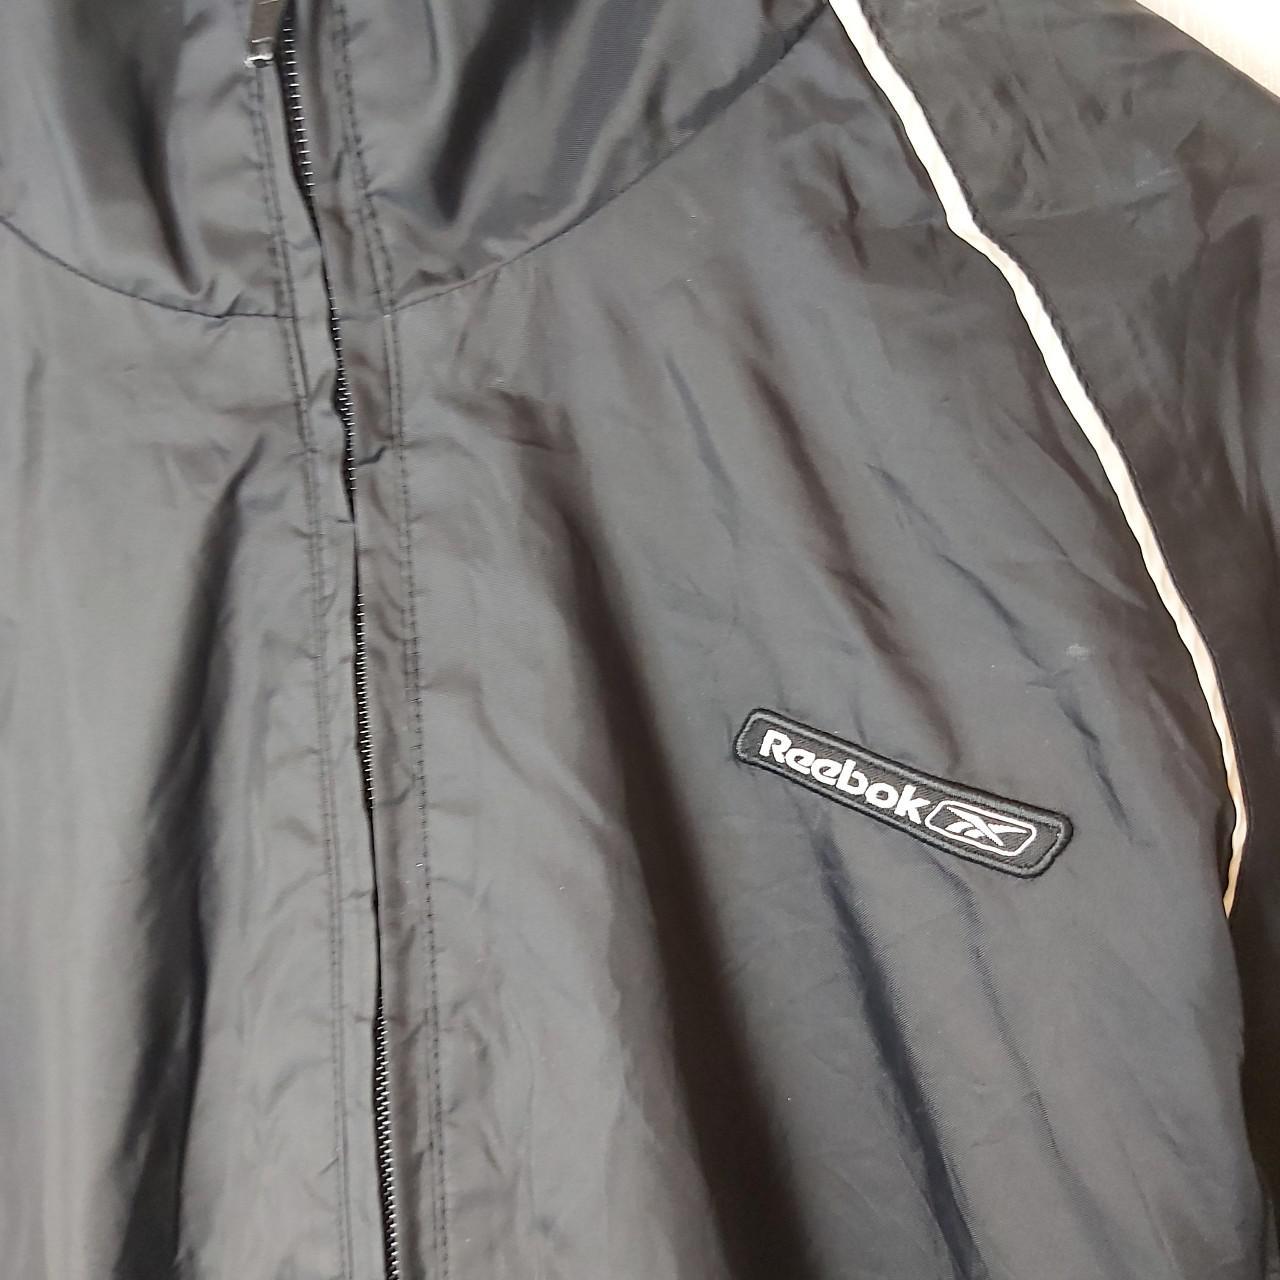 Product Image 2 - Reebok Coat

Black vintage Windbreaker Jacket